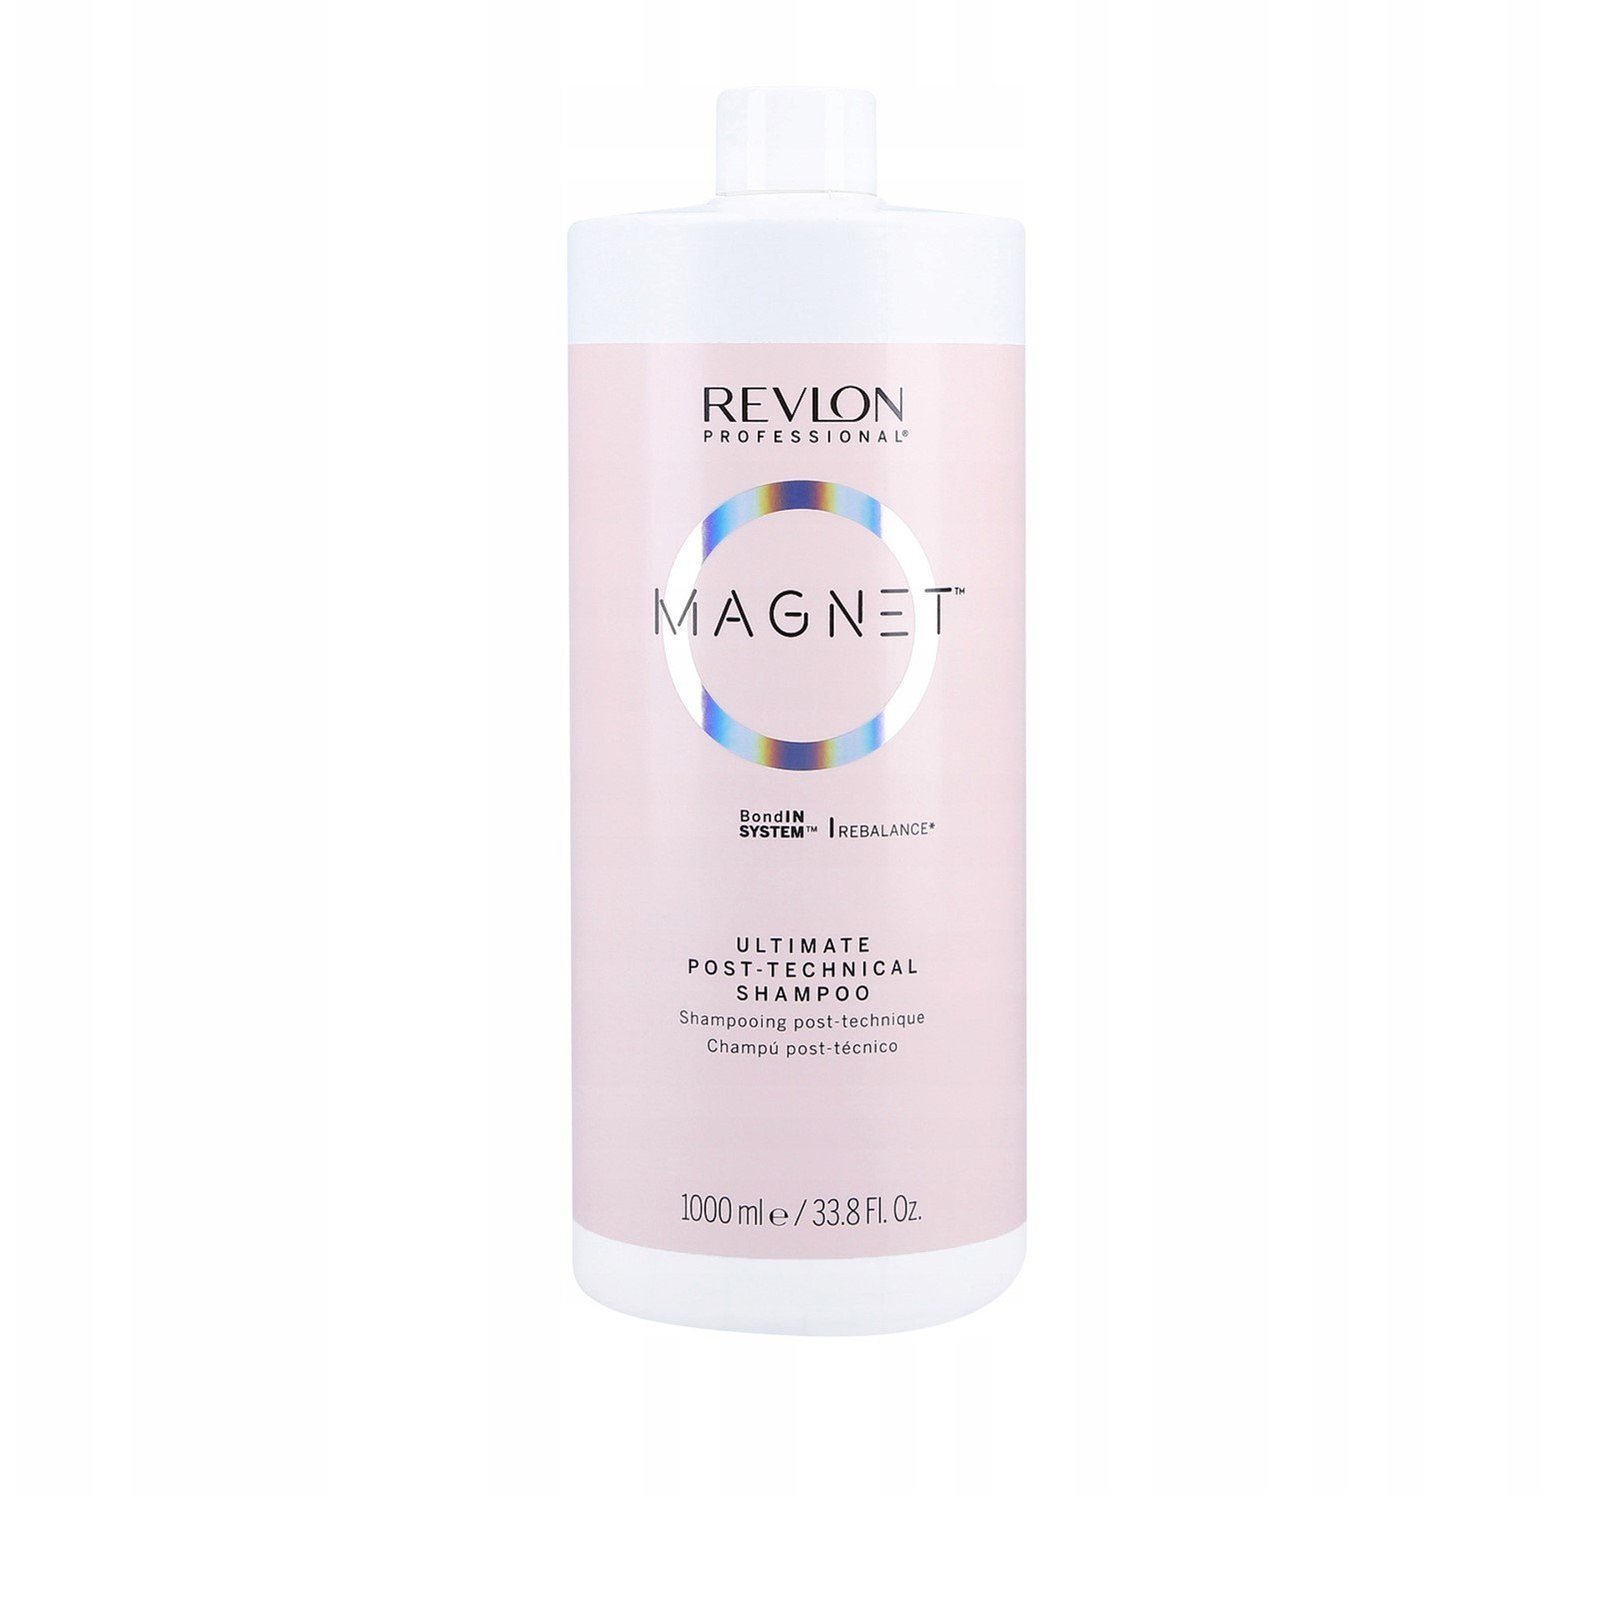 Revlon Professional Magnet Ultimate Post-Technical Shampoo 1L (33.8 fl oz)